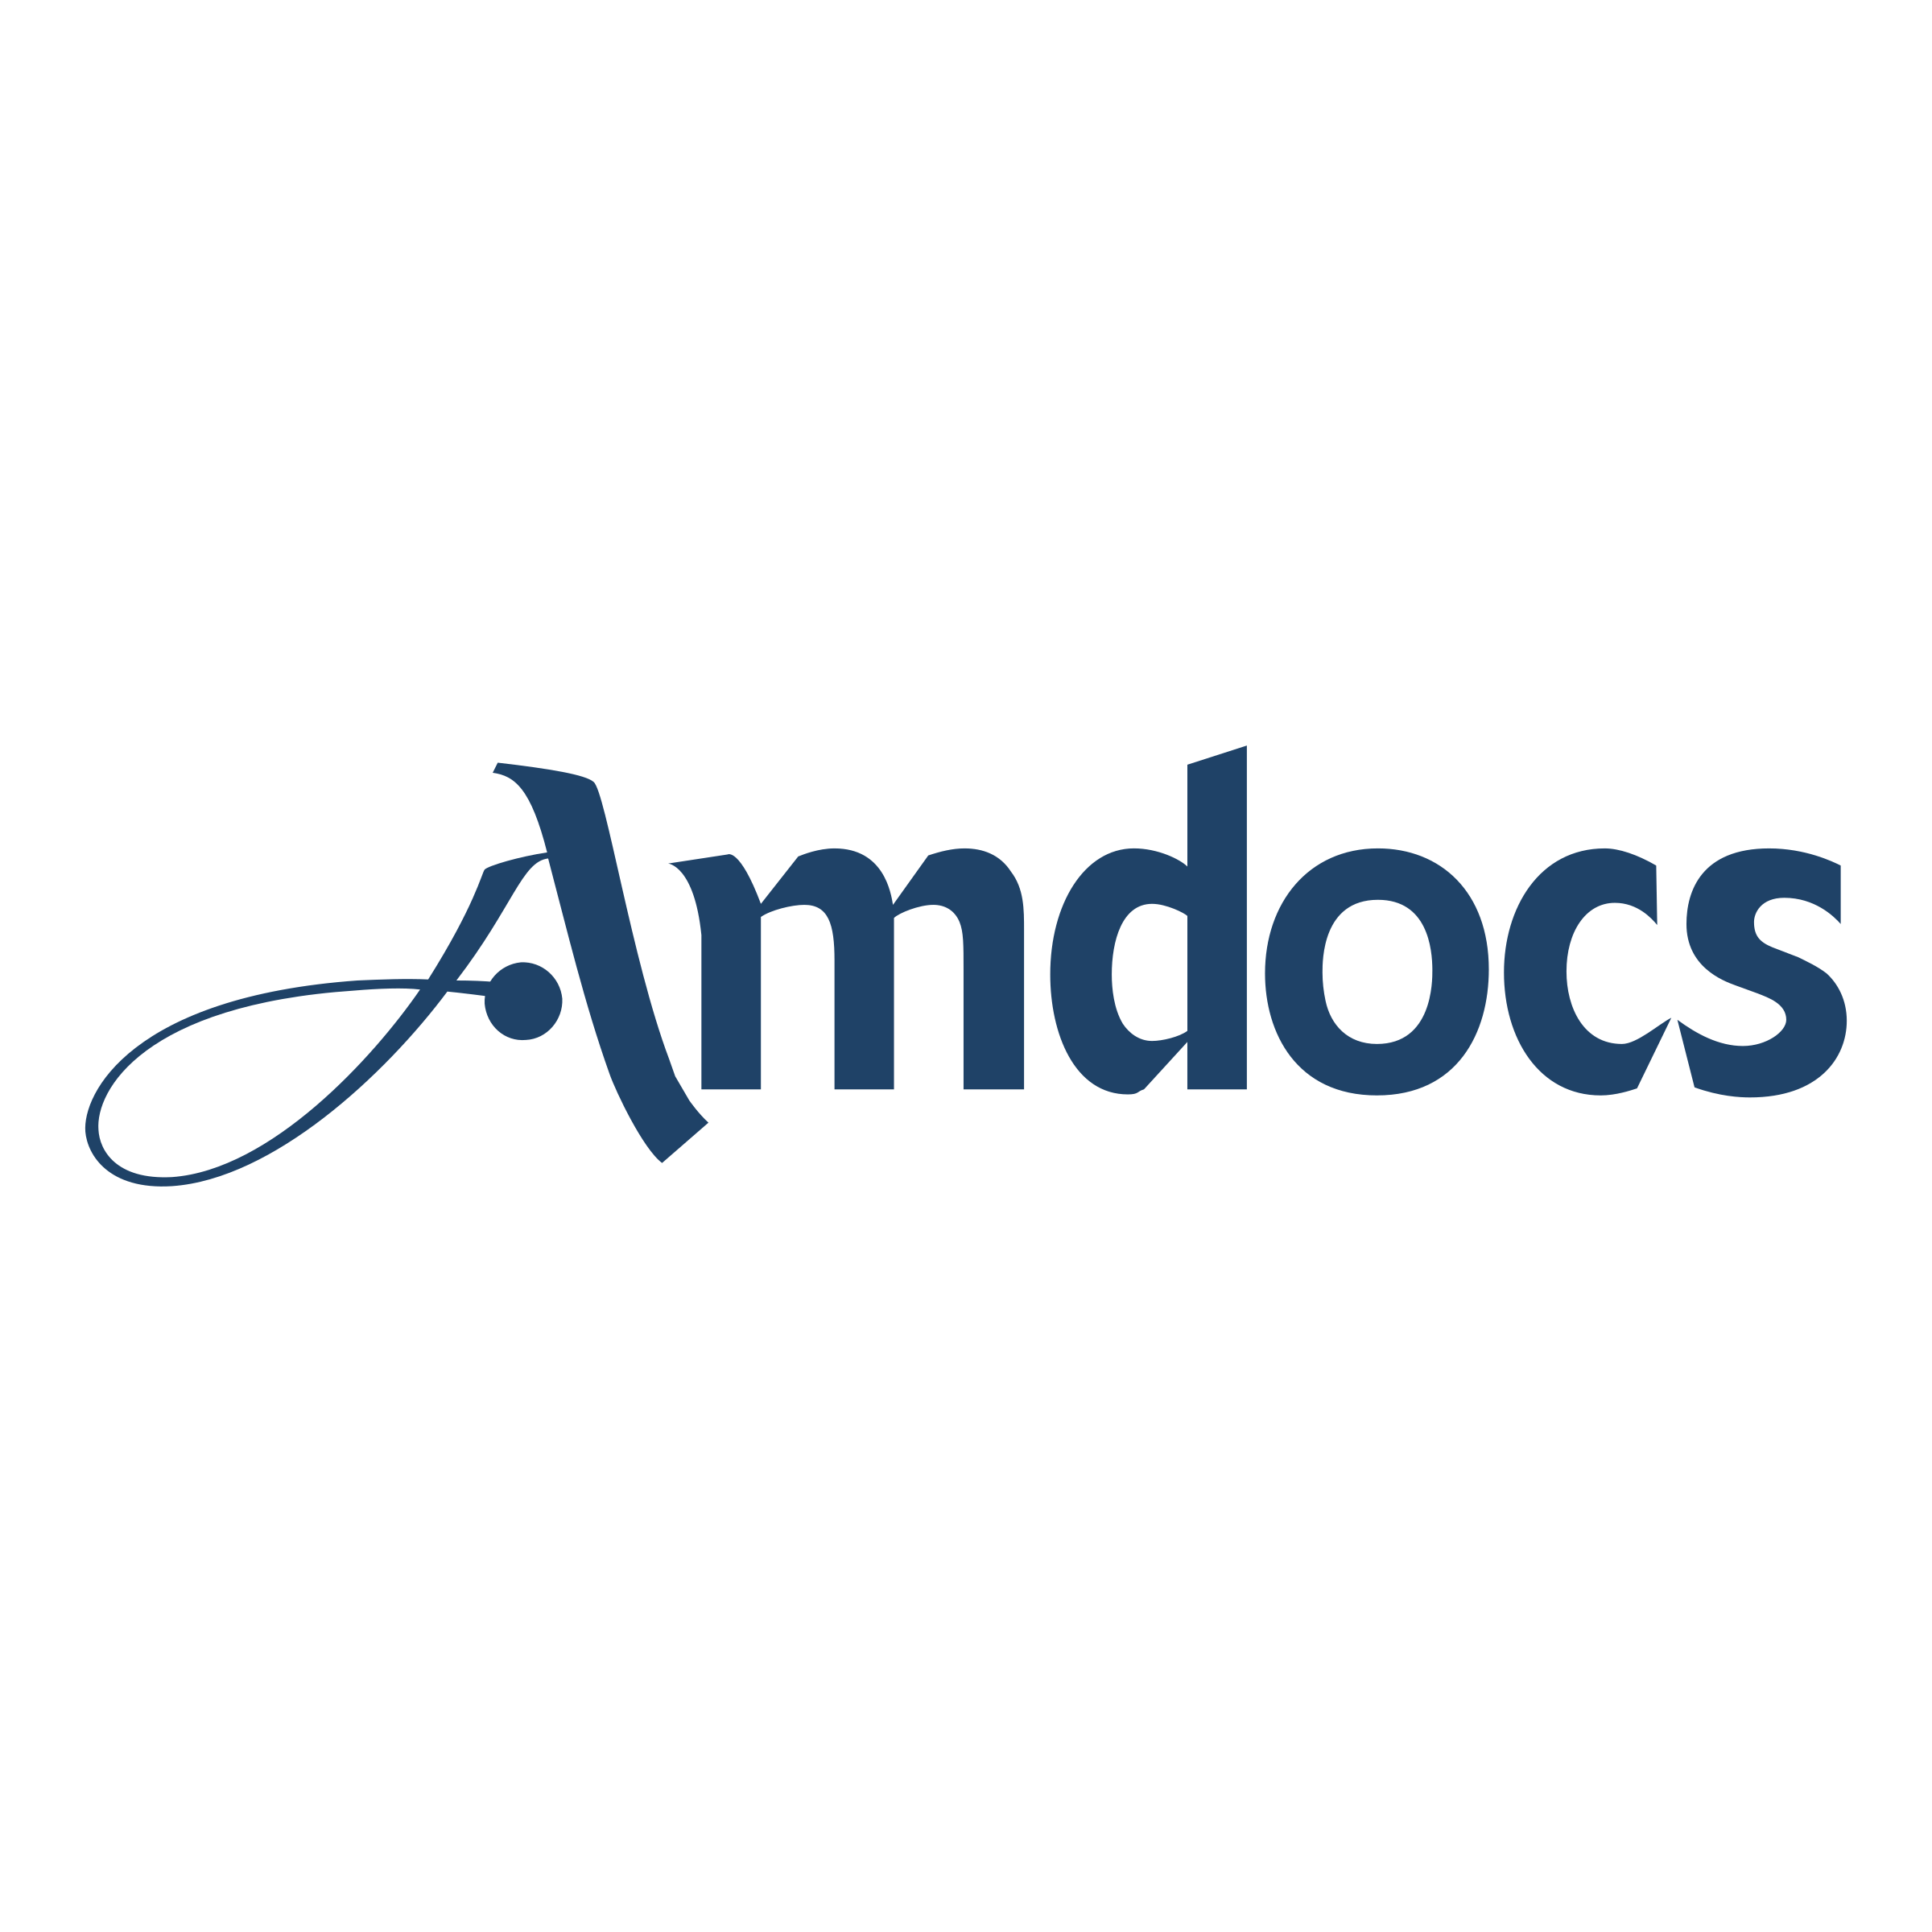 Amdocs Logo - Amdocs Logo PNG Transparent & SVG Vector